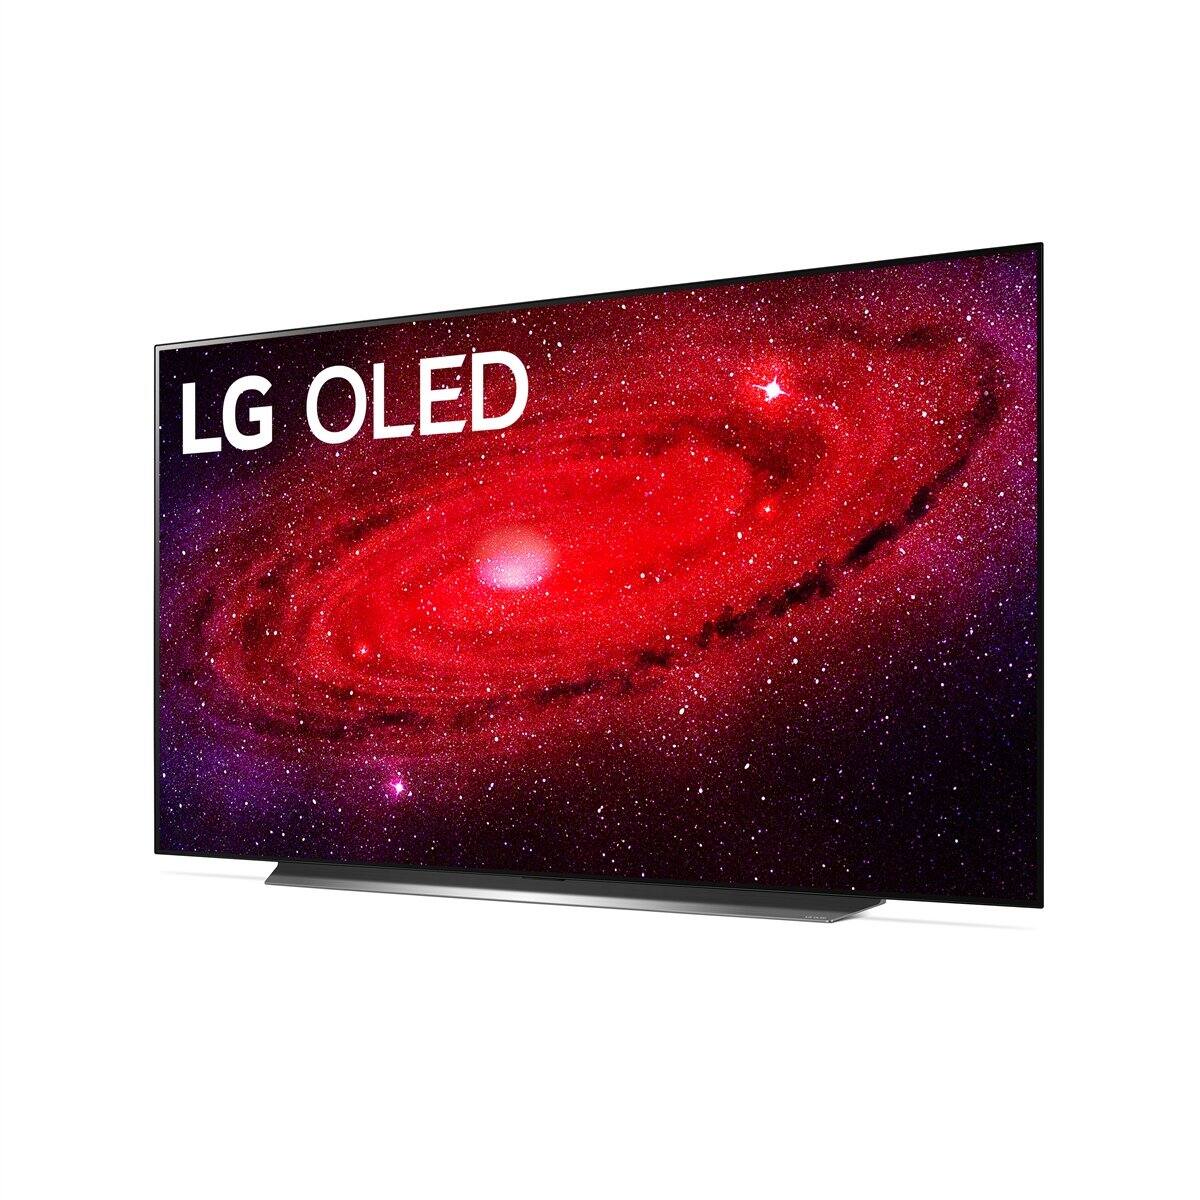 LG OLED77CXPUA 77" Class HDR 4K UHD Smart OLED TV $2849 + Free Shipping